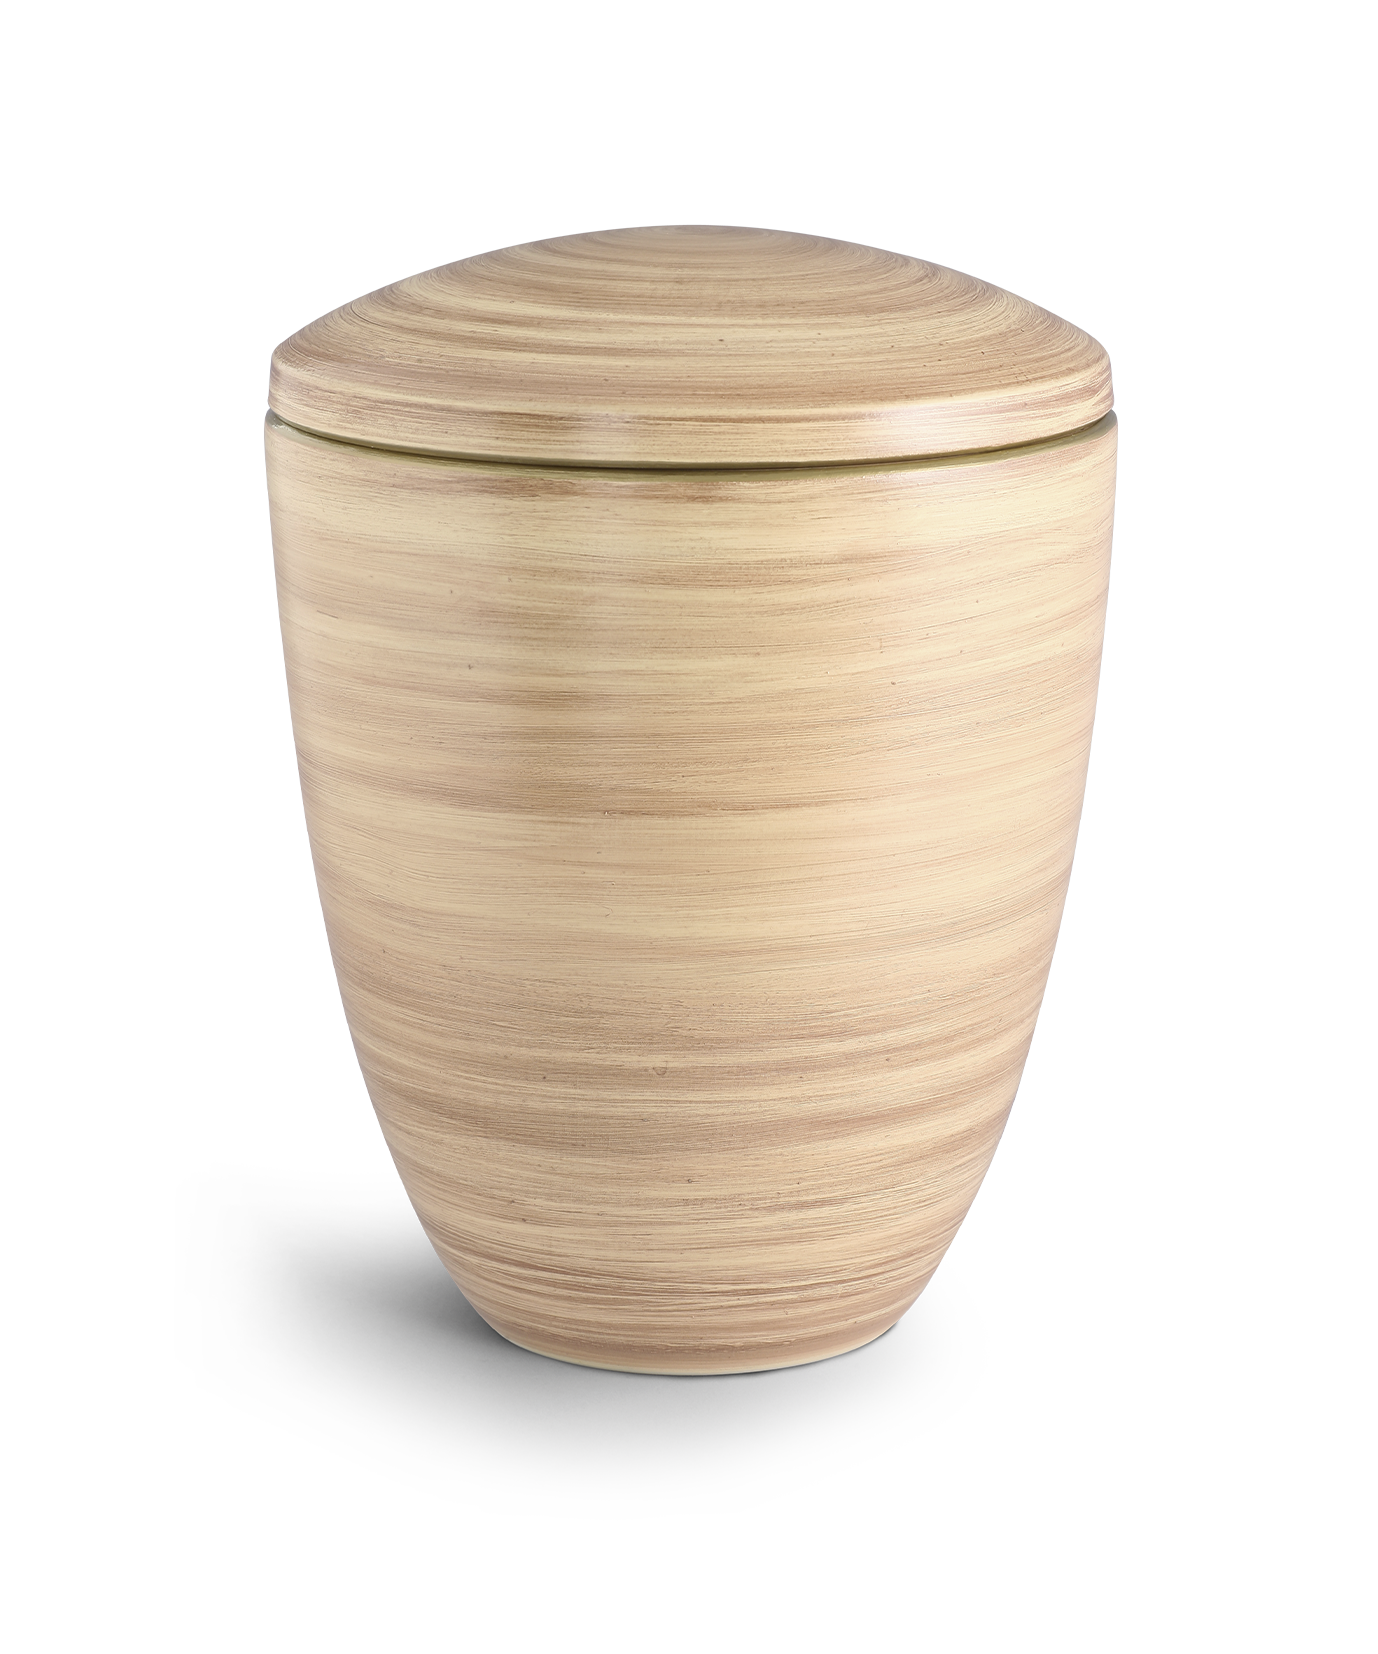 Kaufen saharasand Völsing Urne Edition Ceramica Keramik